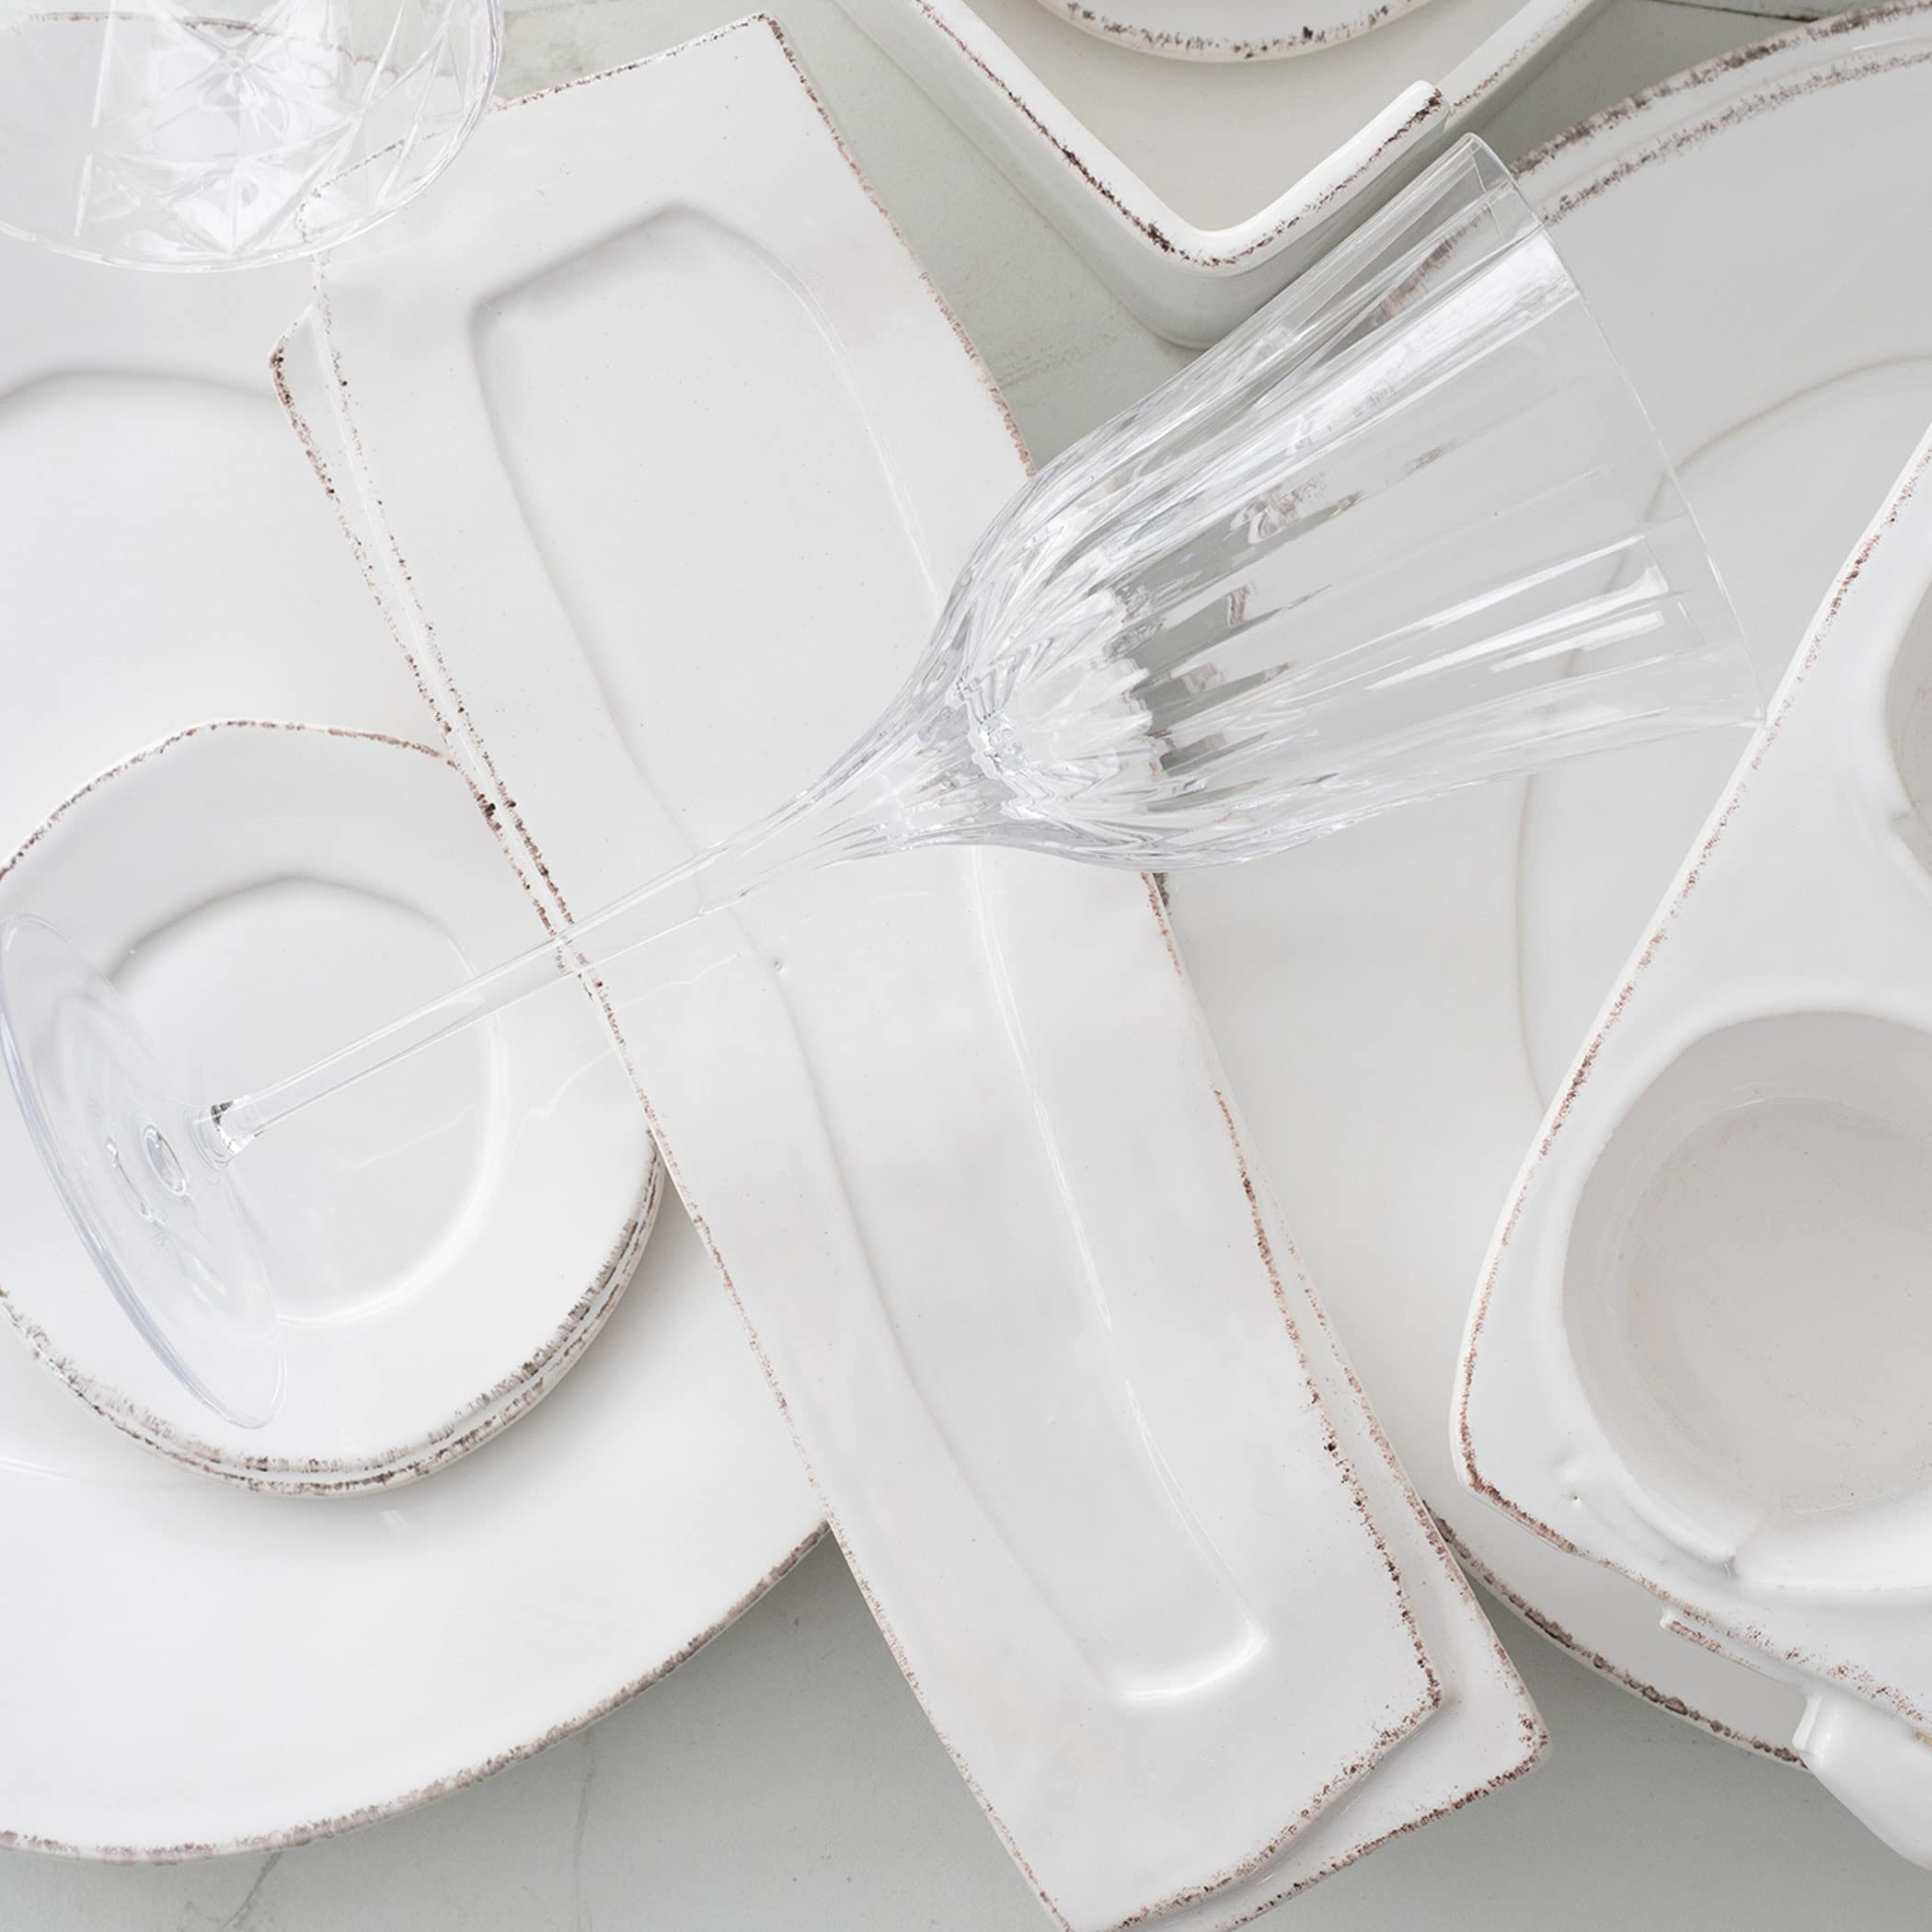 Vietri Lastra White Spoon Rest, 11" Ceramic Cooking/Serving Utensil Tray, Stove/Counter Decor